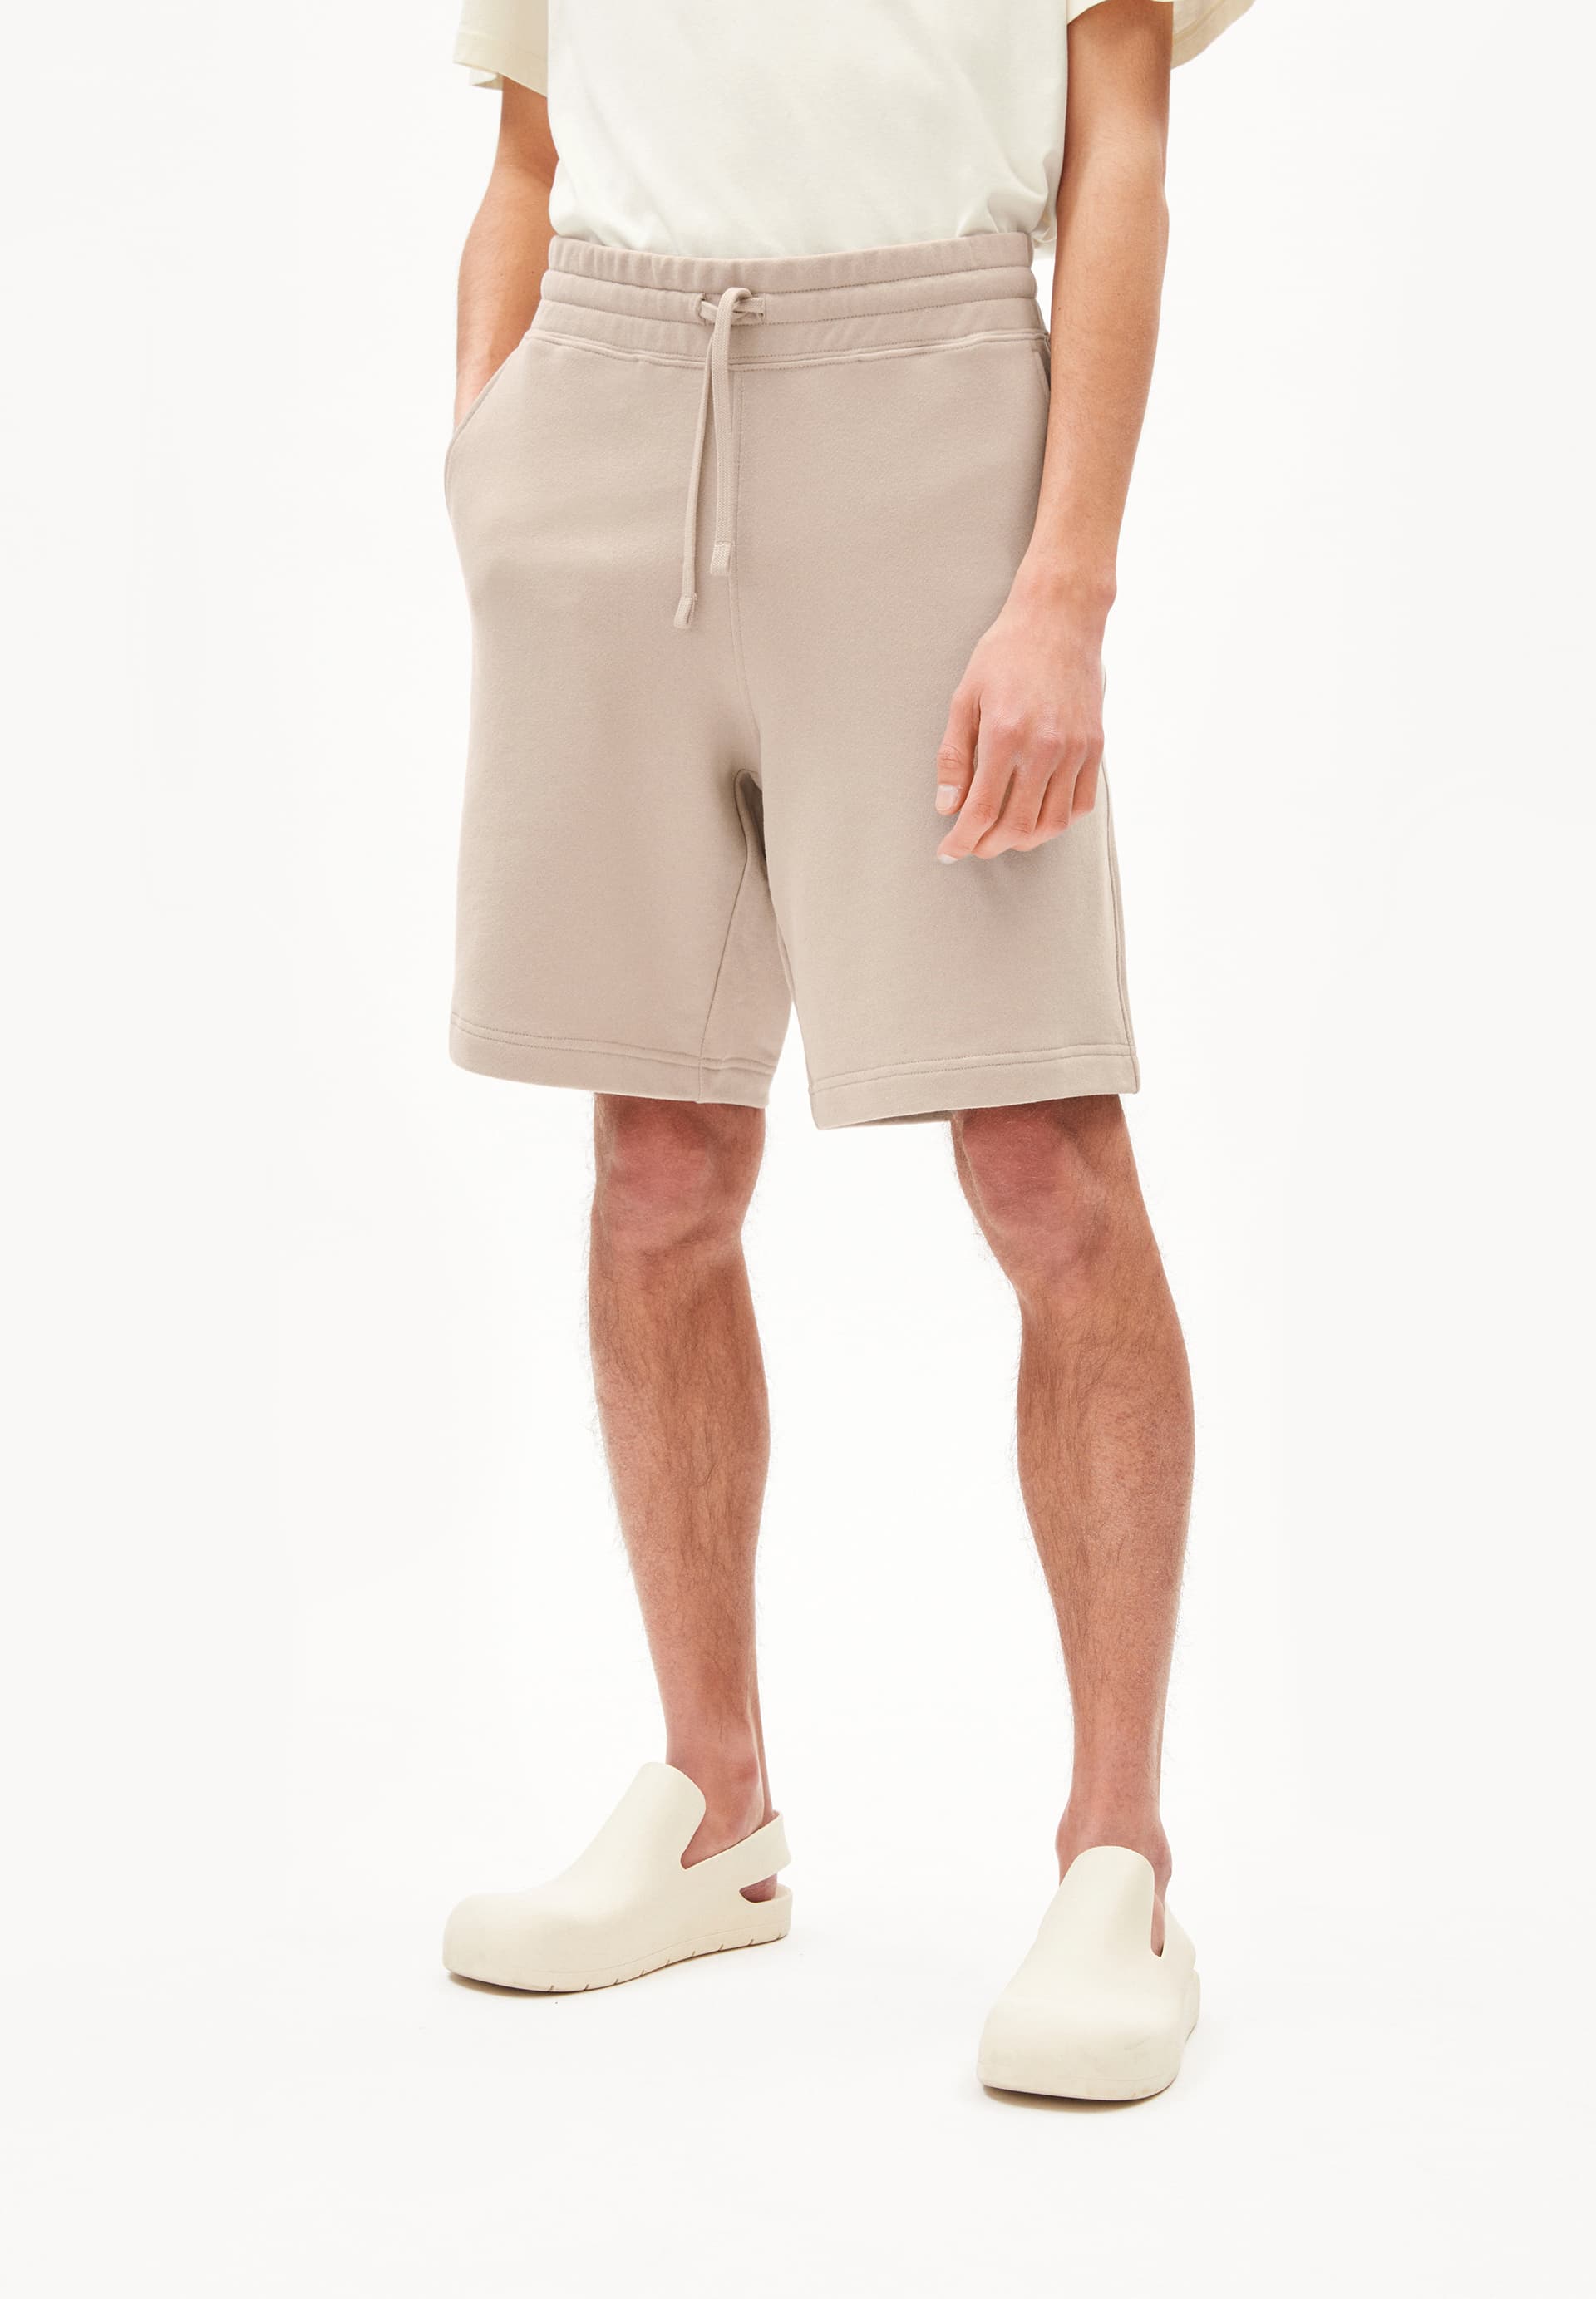 MAARCO COMFORT Sweat Shorts made of Organic Cotton Mix